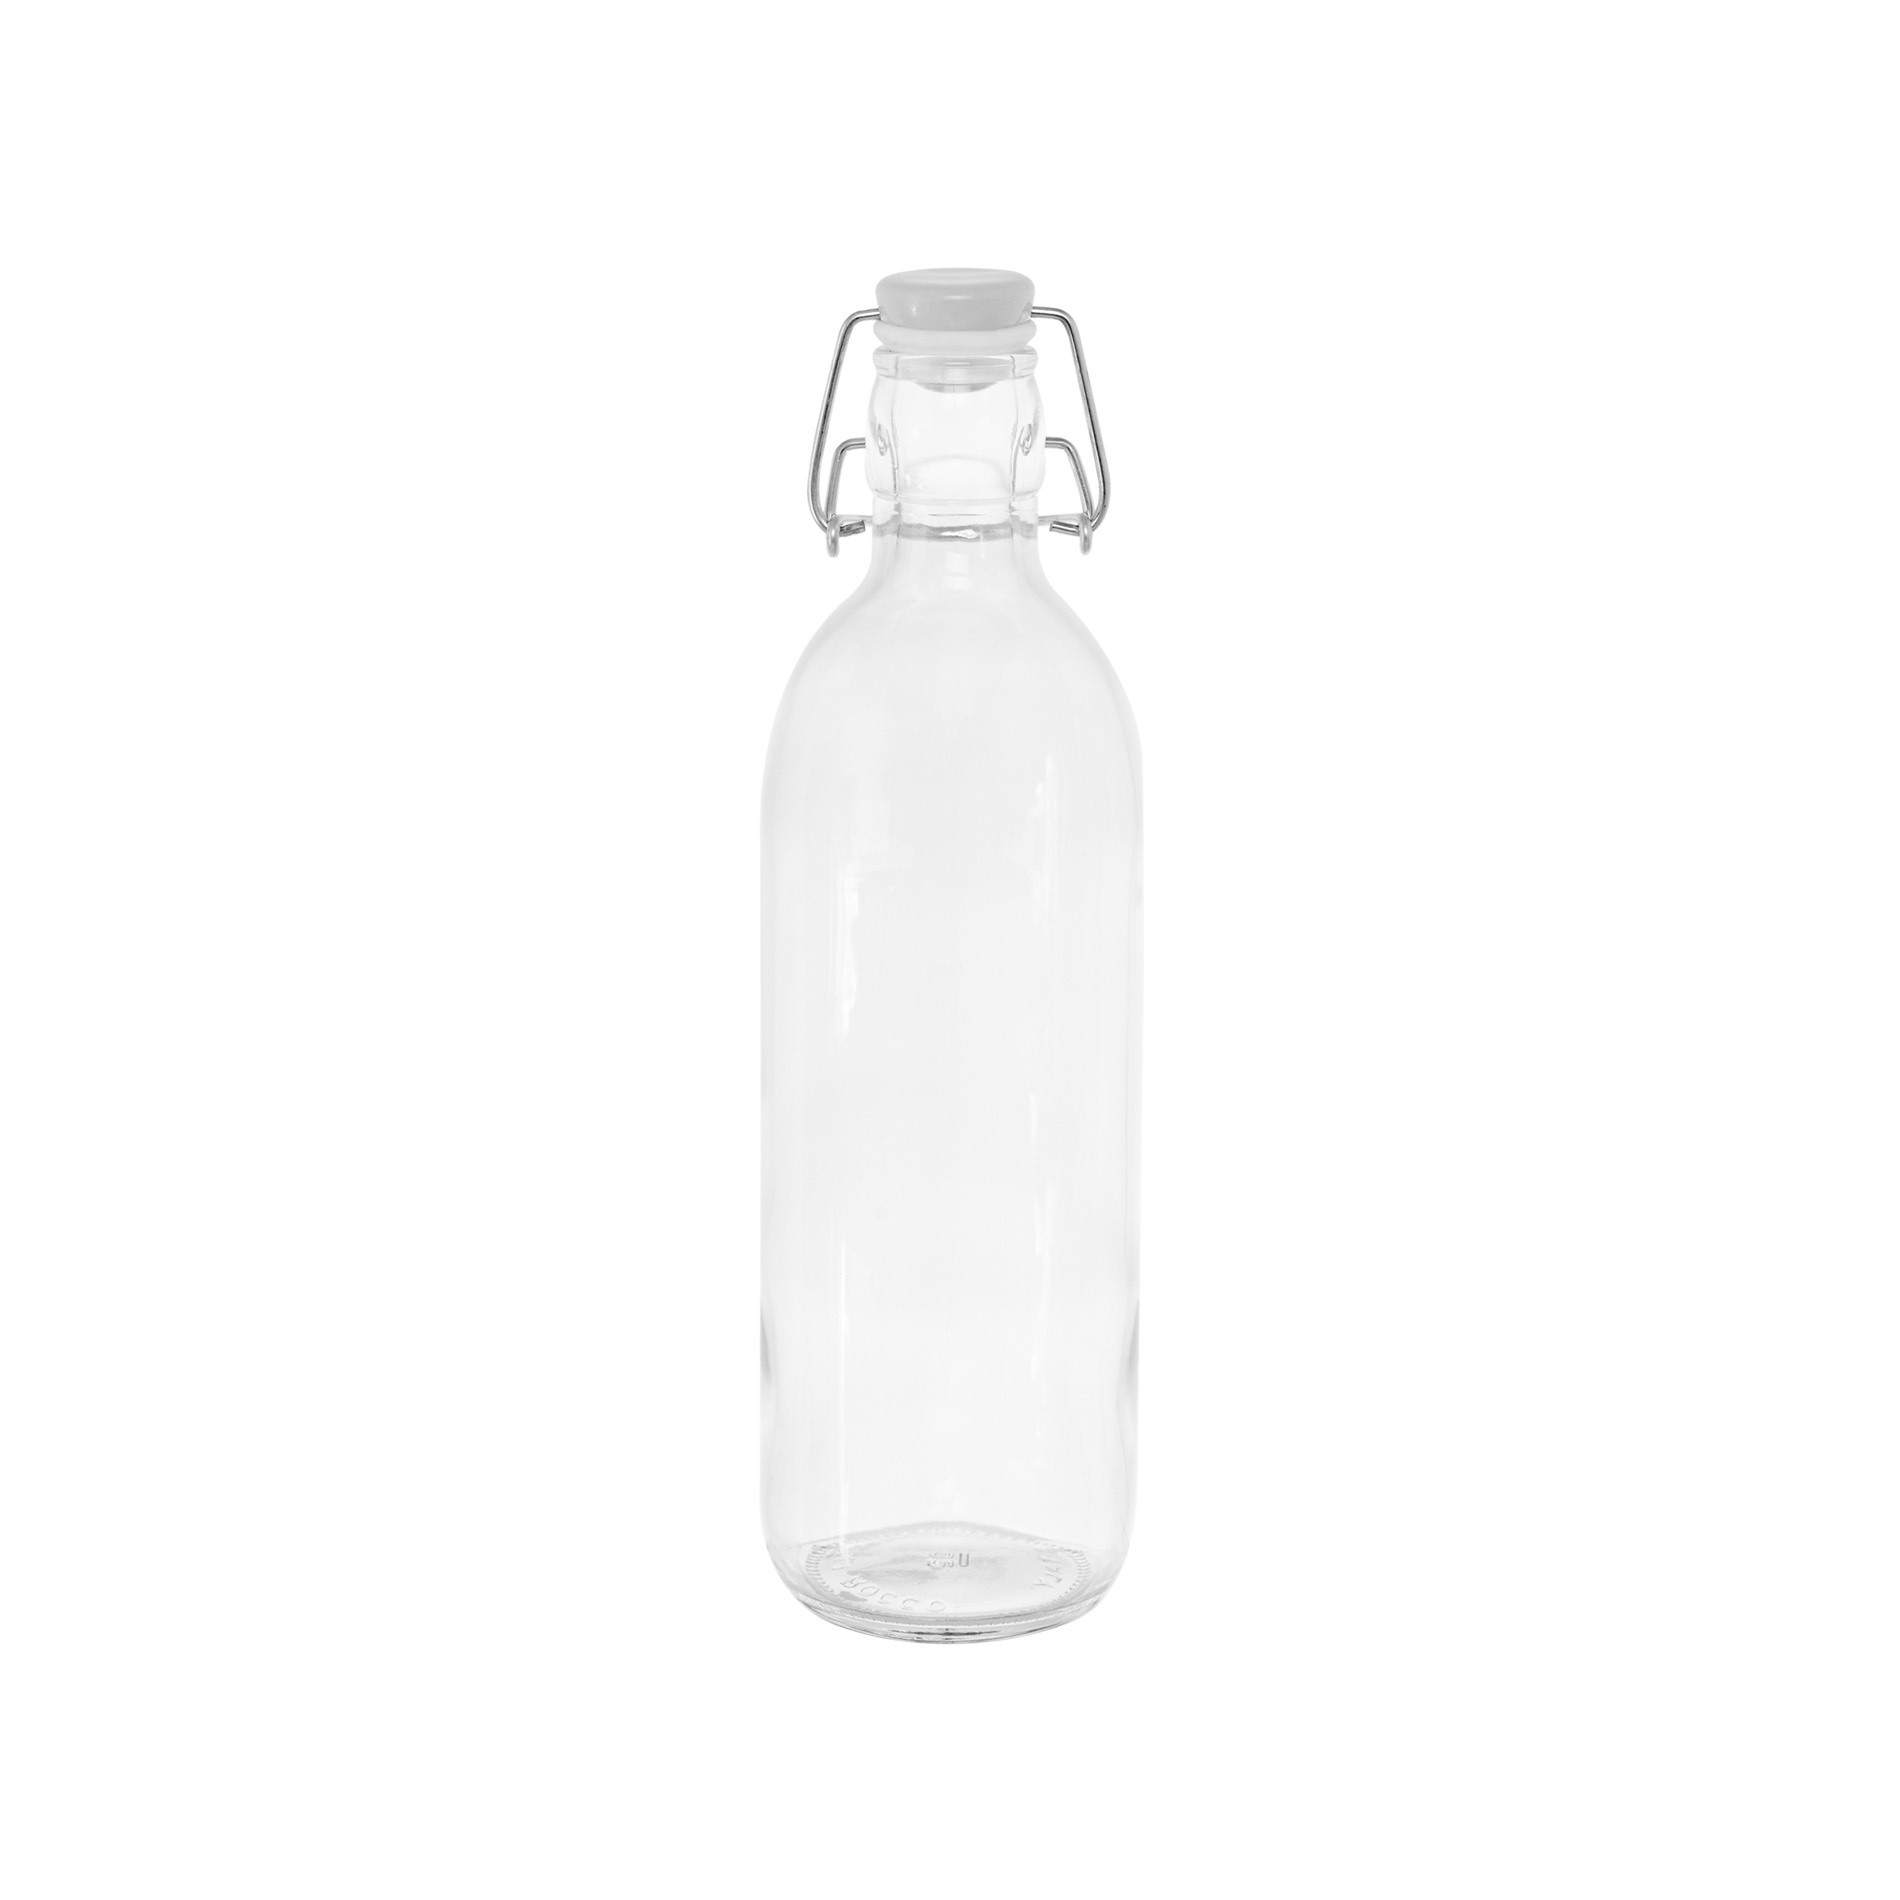 Bottiglia vetro trasparente 1Lt, Trasparente, large image number 0